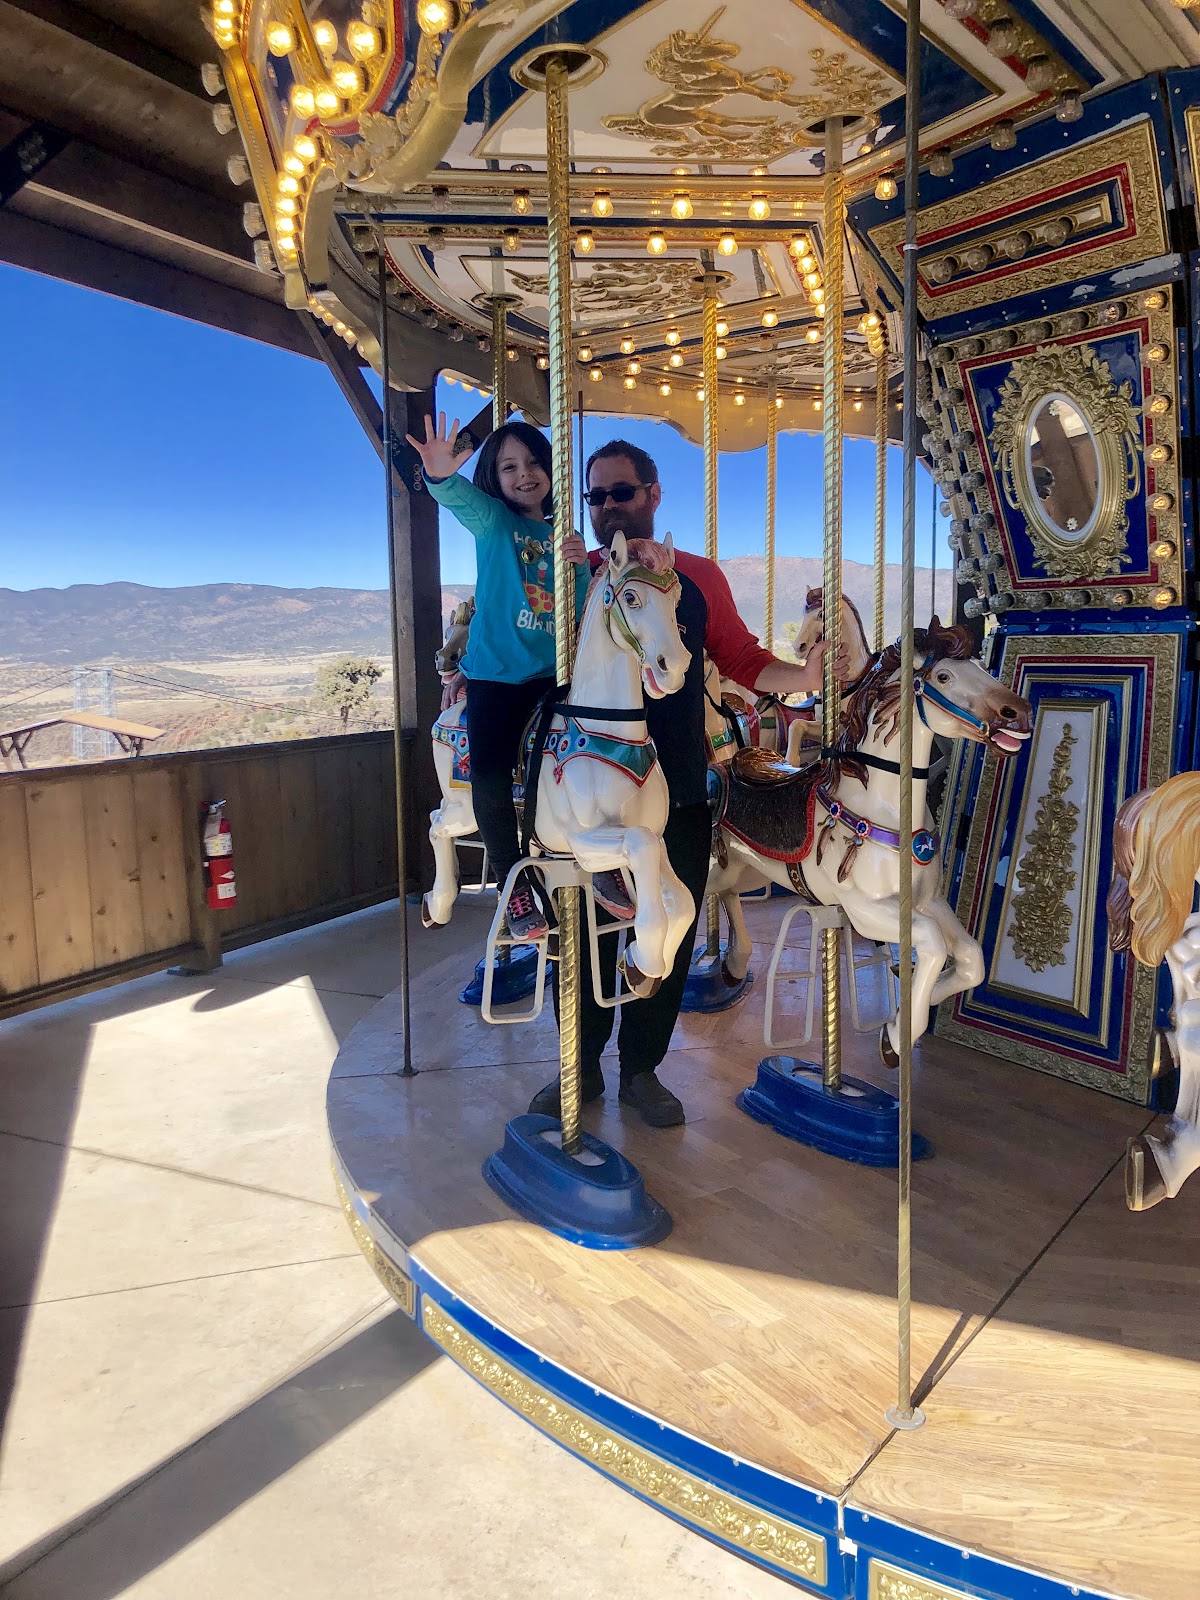 carousel family time in Colorado